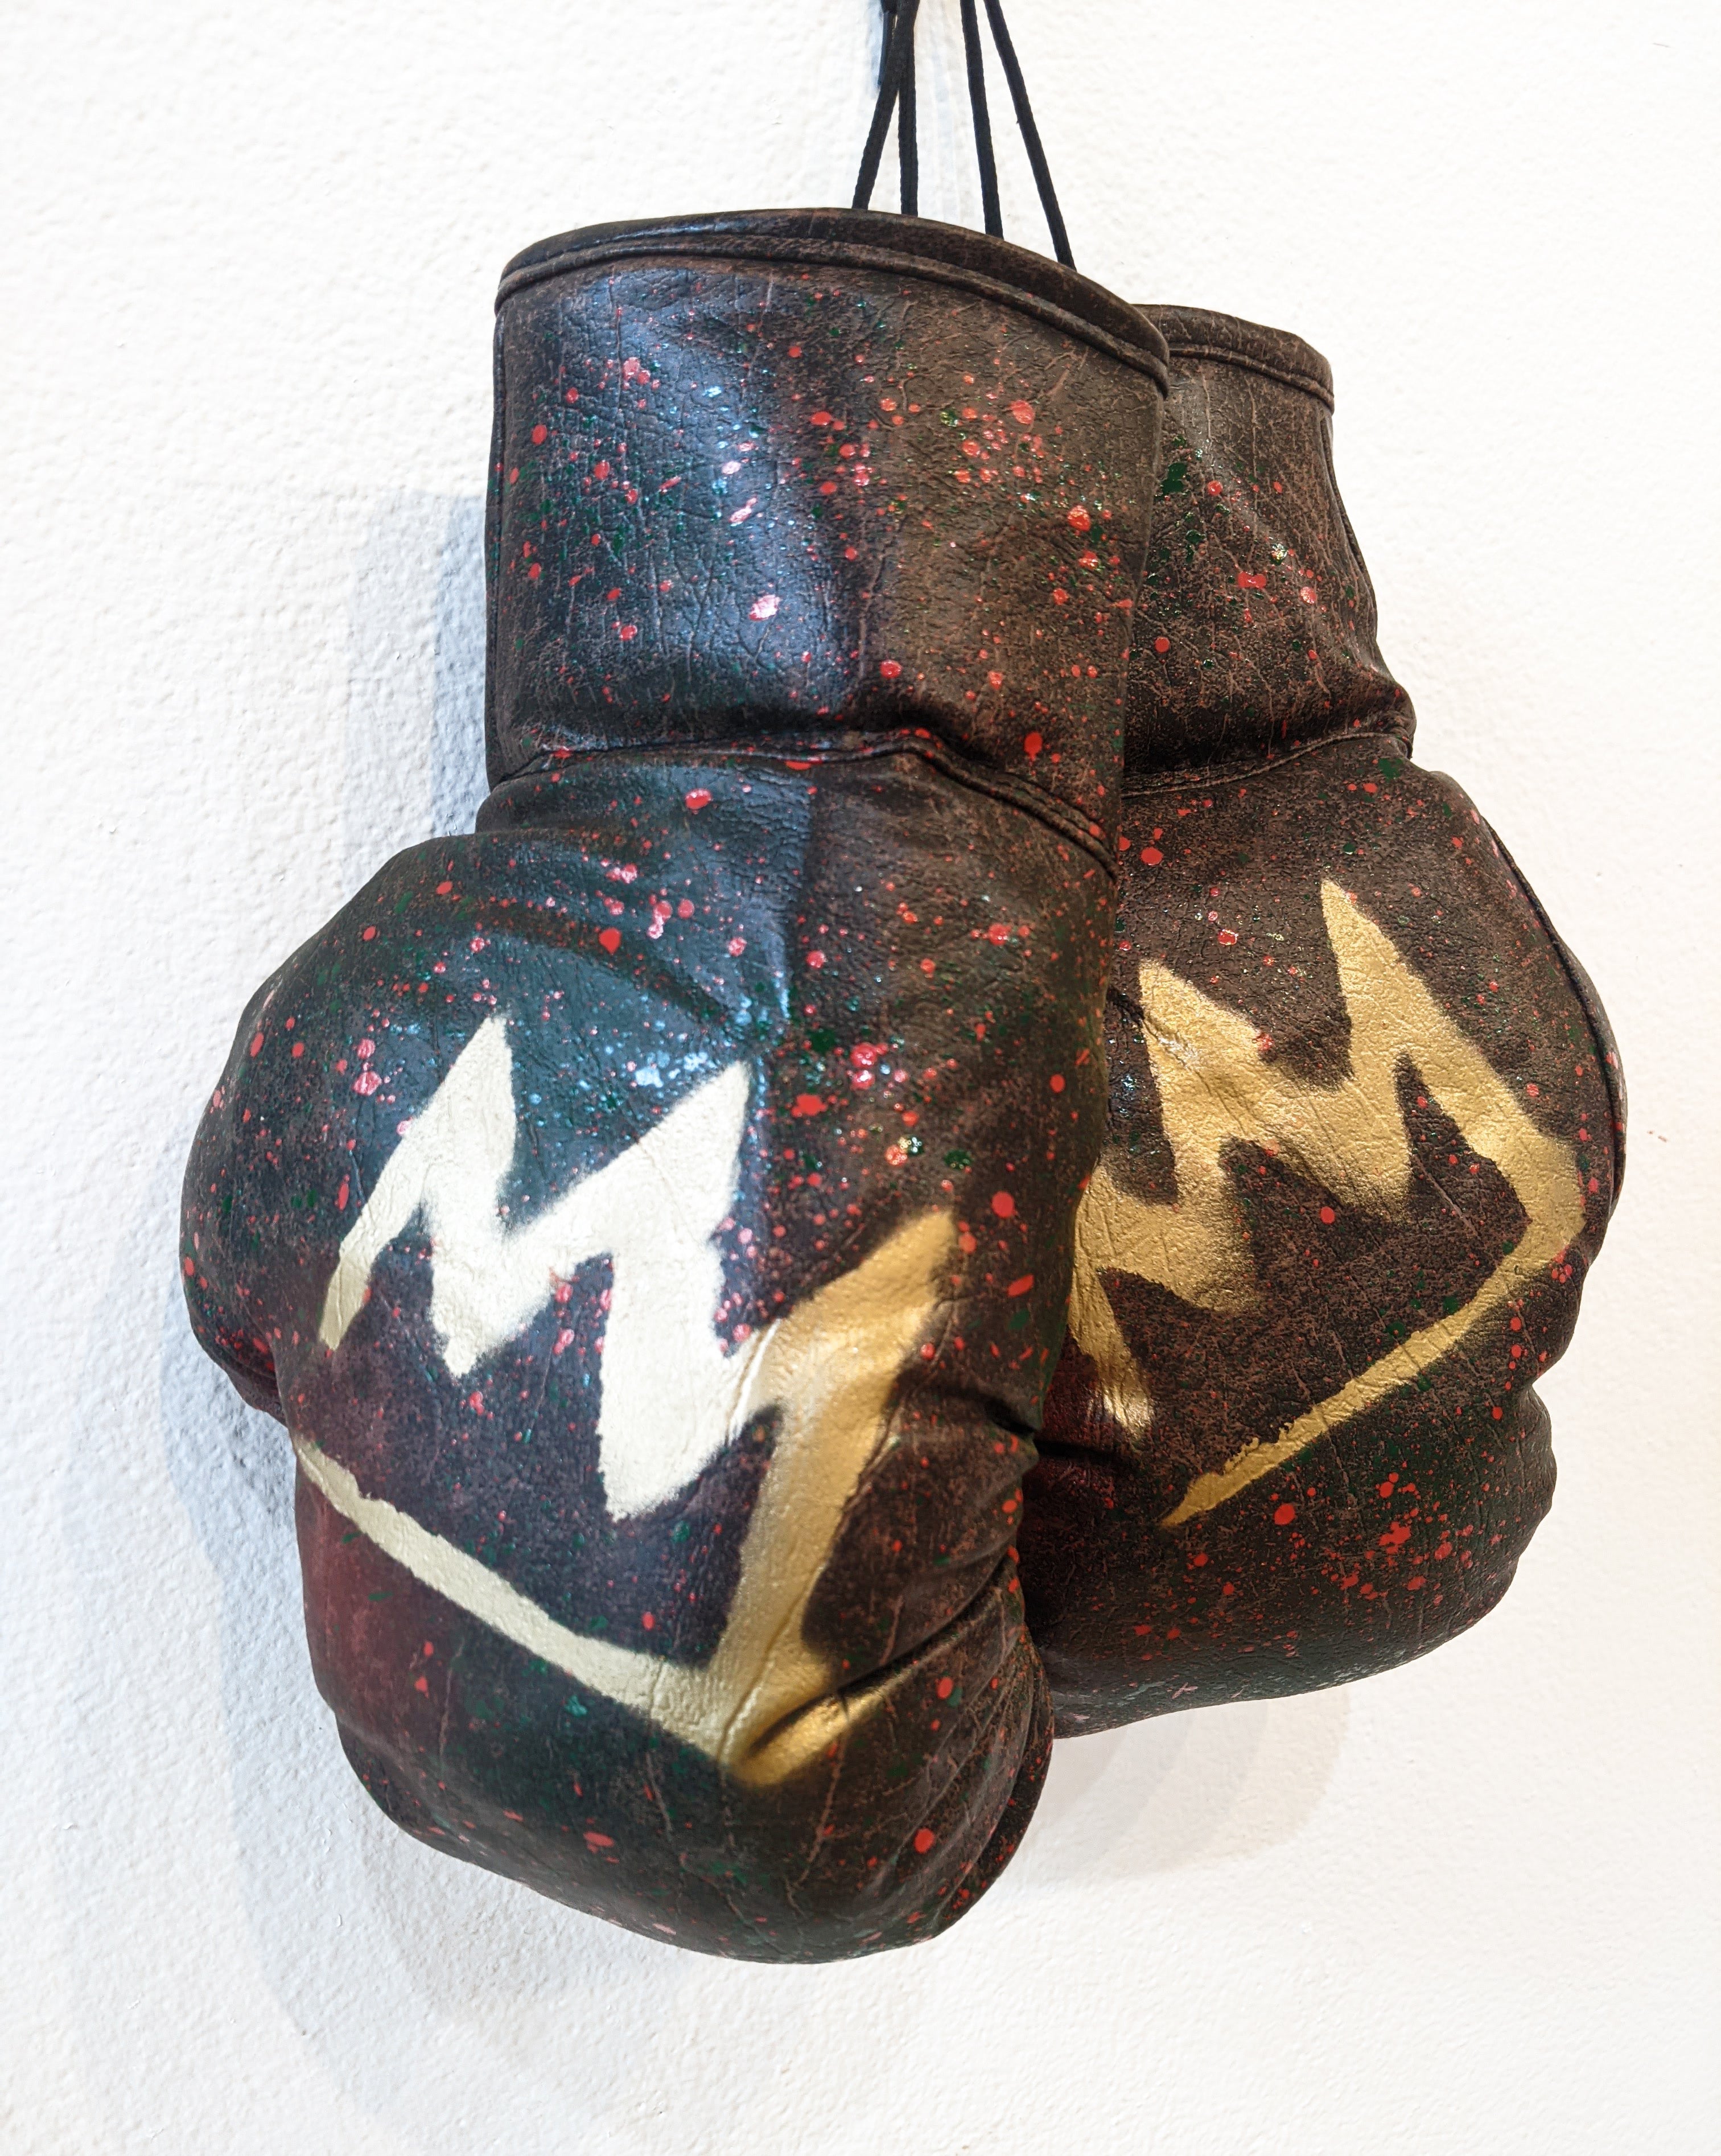 "Vintage Boxing Gloves 3" by JC Rivera